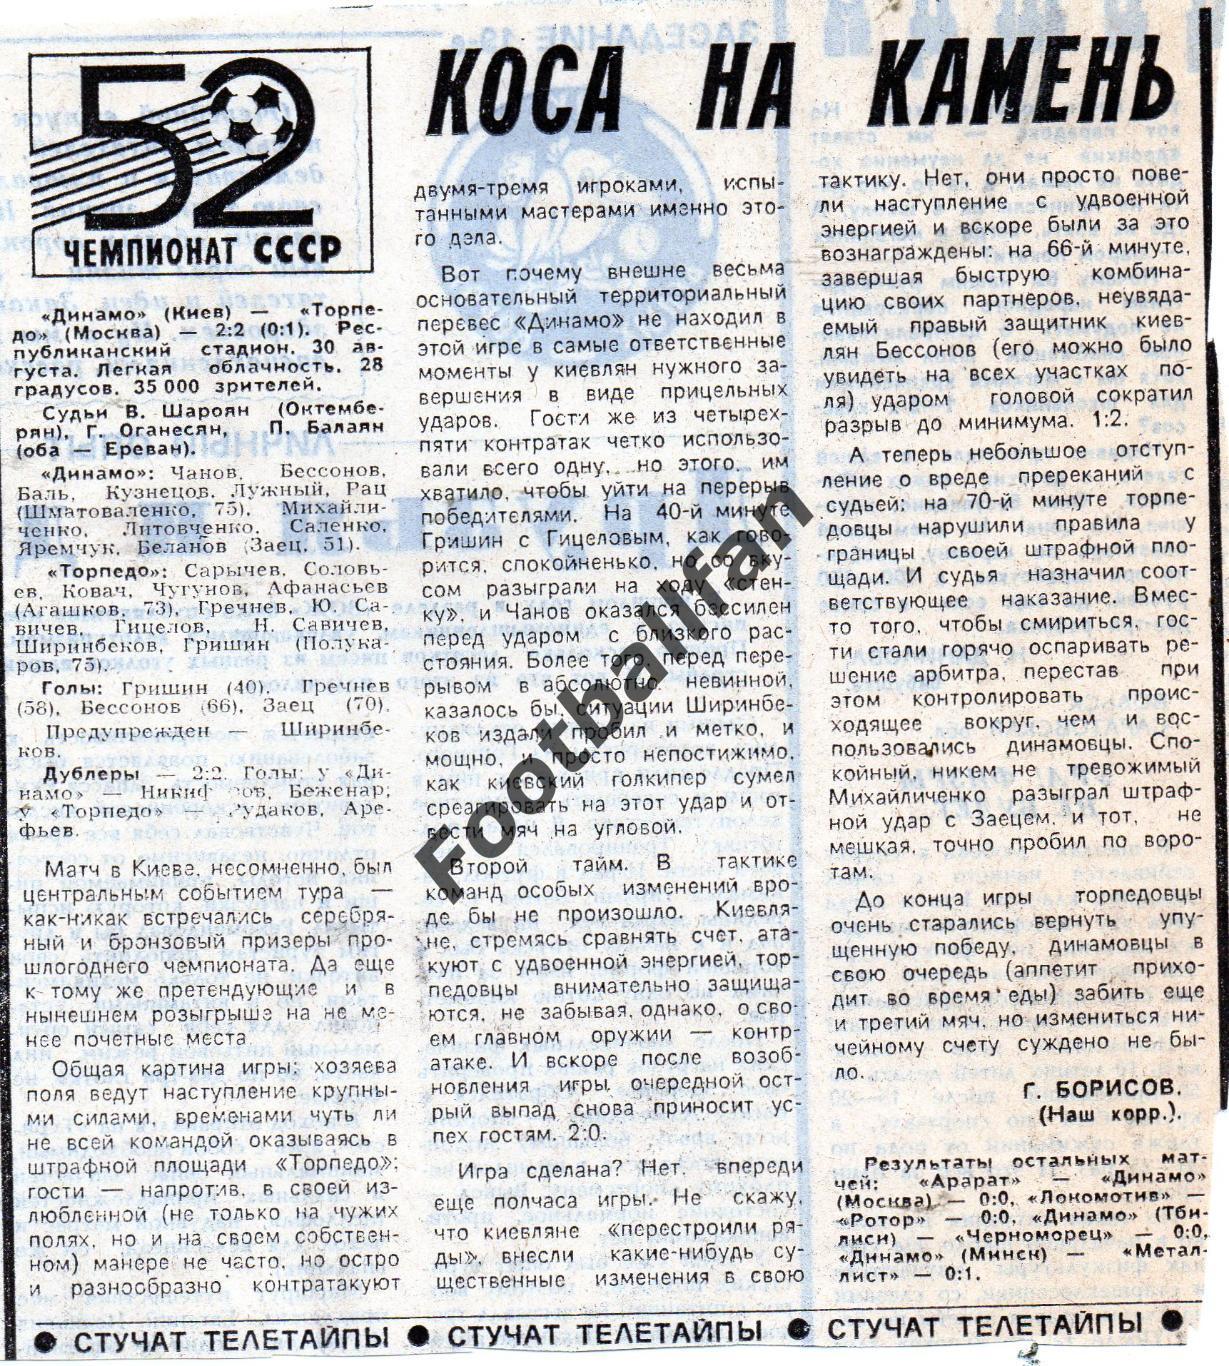 Динамо Киев - Торпедо Москва 30.08.1989